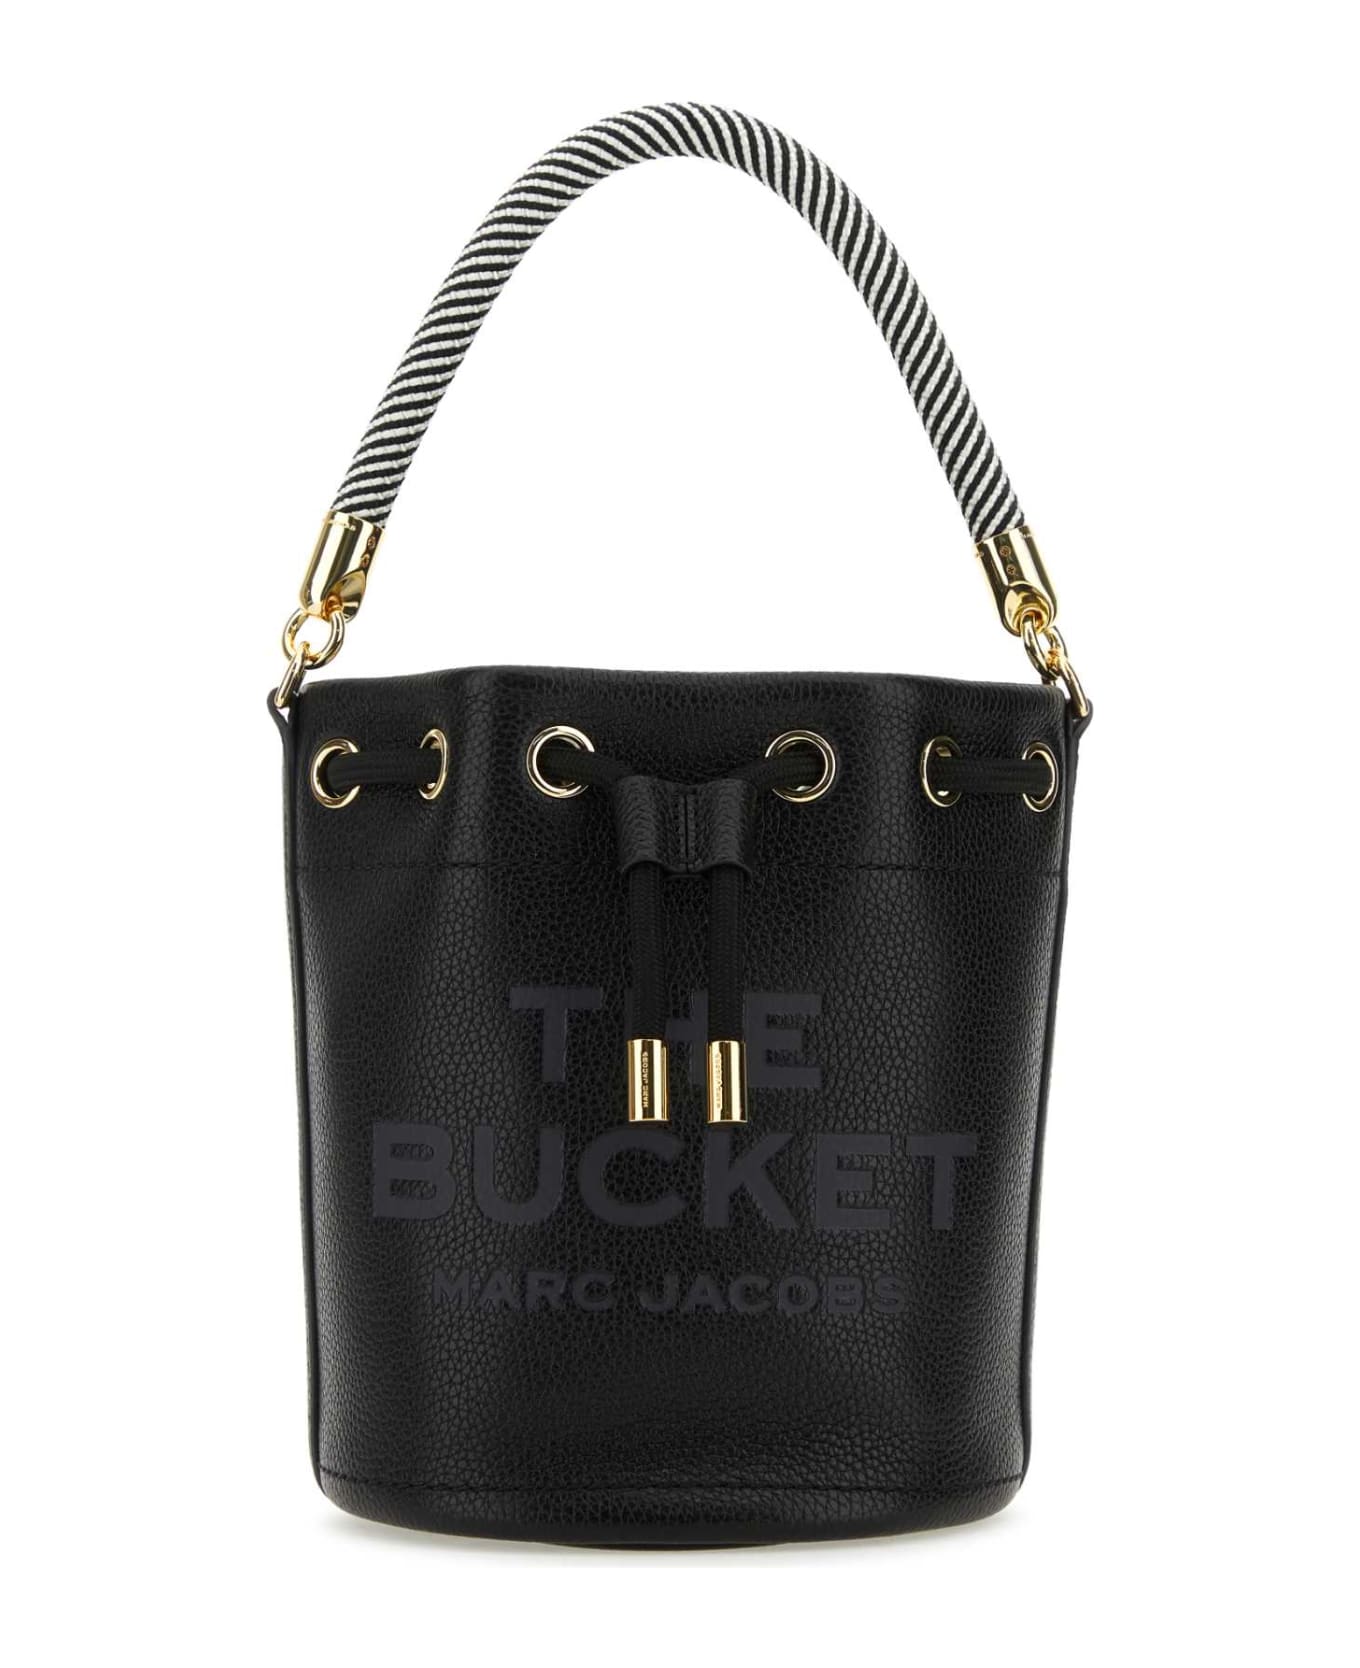 Marc Jacobs Black Leather The Bucket Bucket Bag - 001